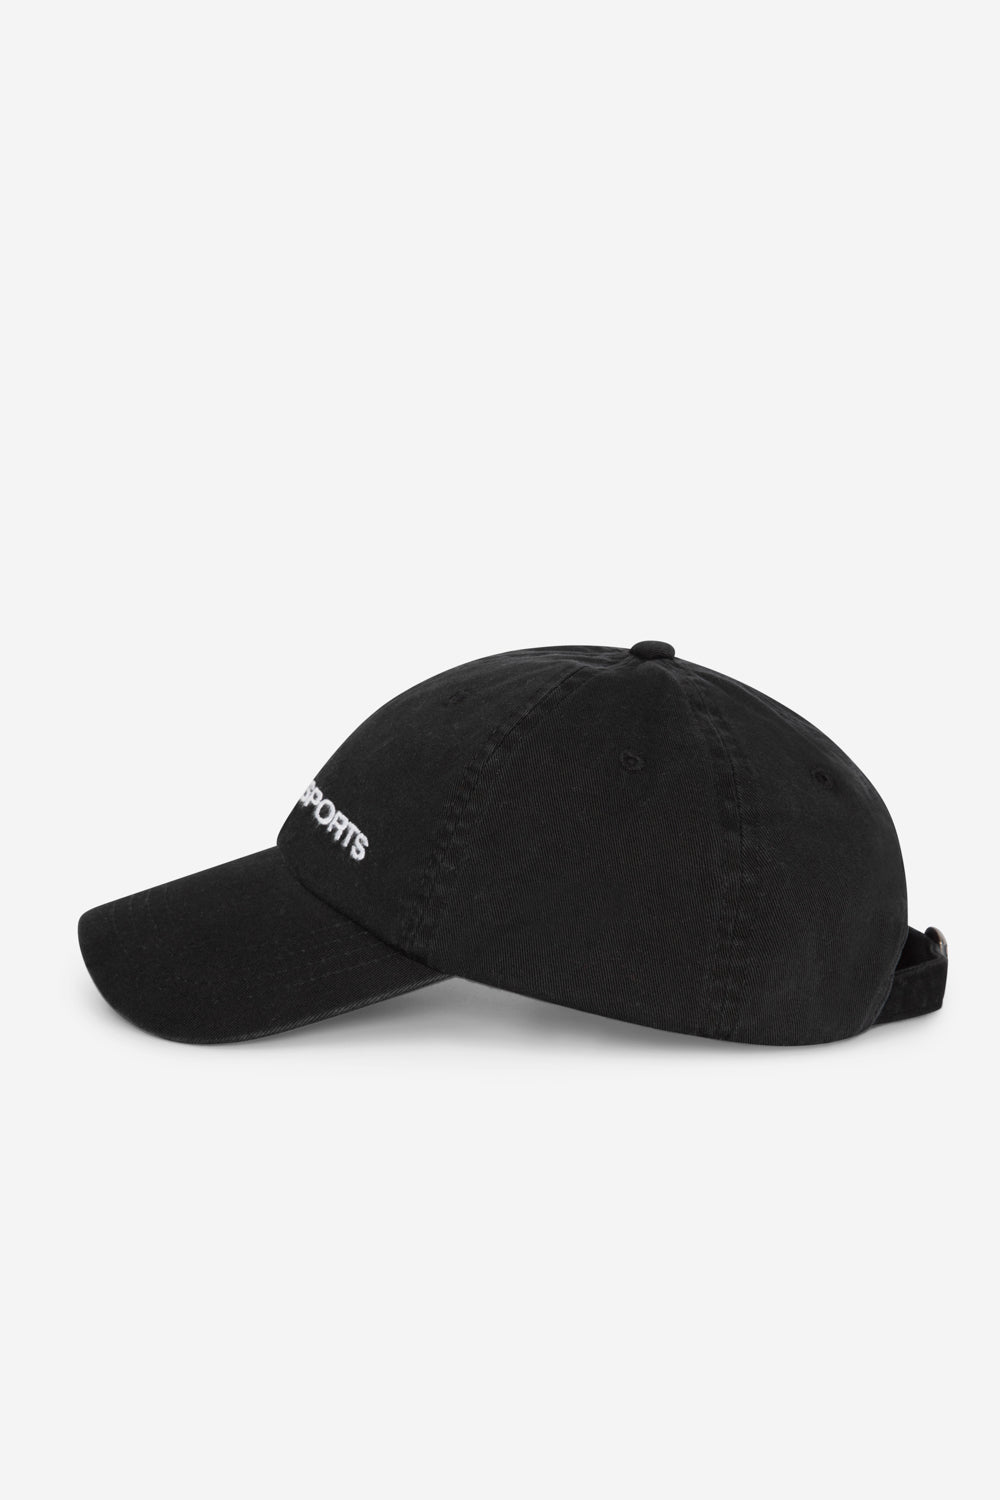 SIDNEY UNISEX CAP BLACK